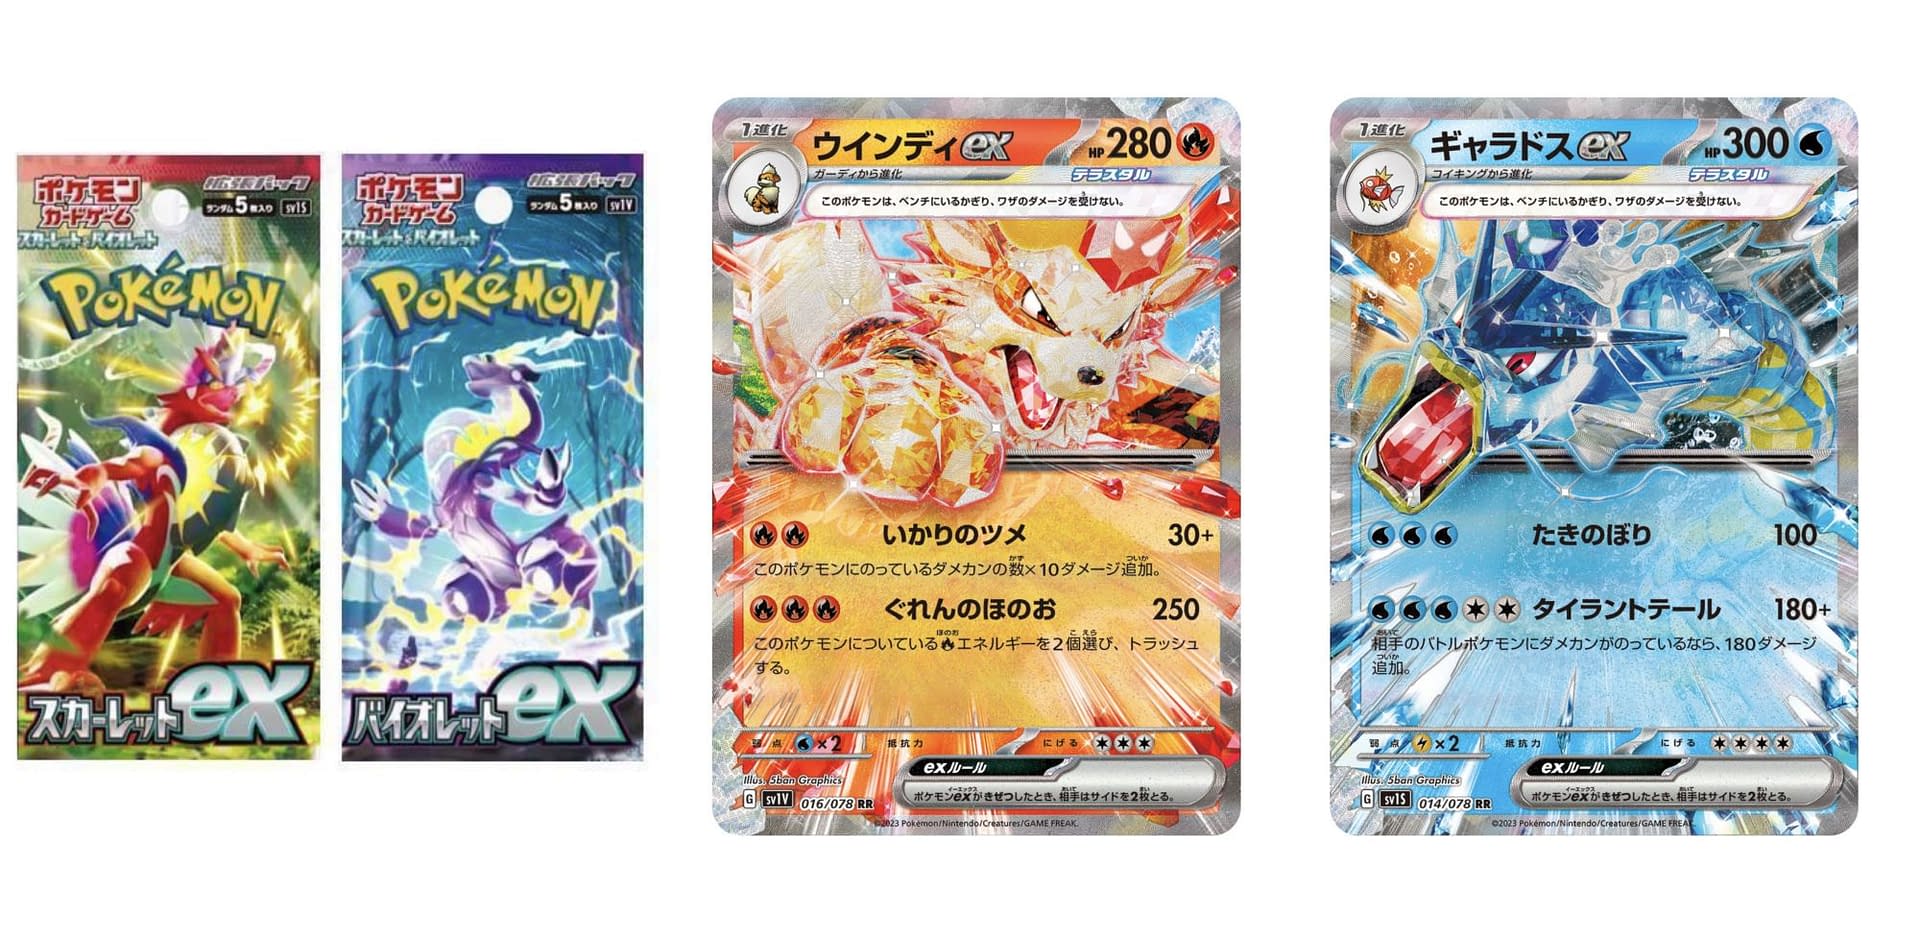 Pokémon-Switch Stock on X: The final set releasing in Japan